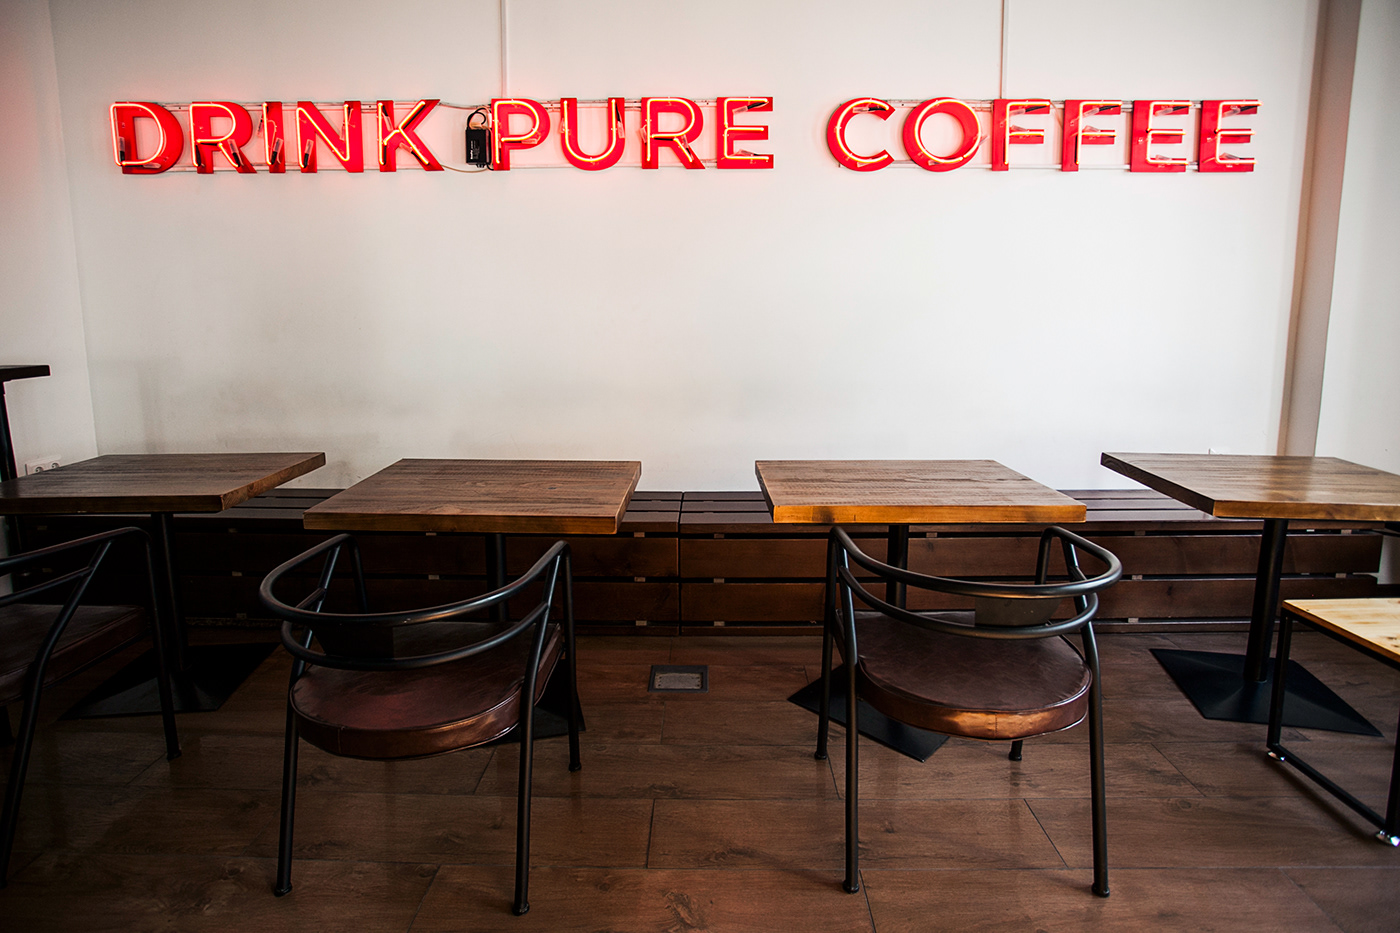 Coffee coffeeshop bar restaurant designinterior design Interior skuratov caffe кофейня